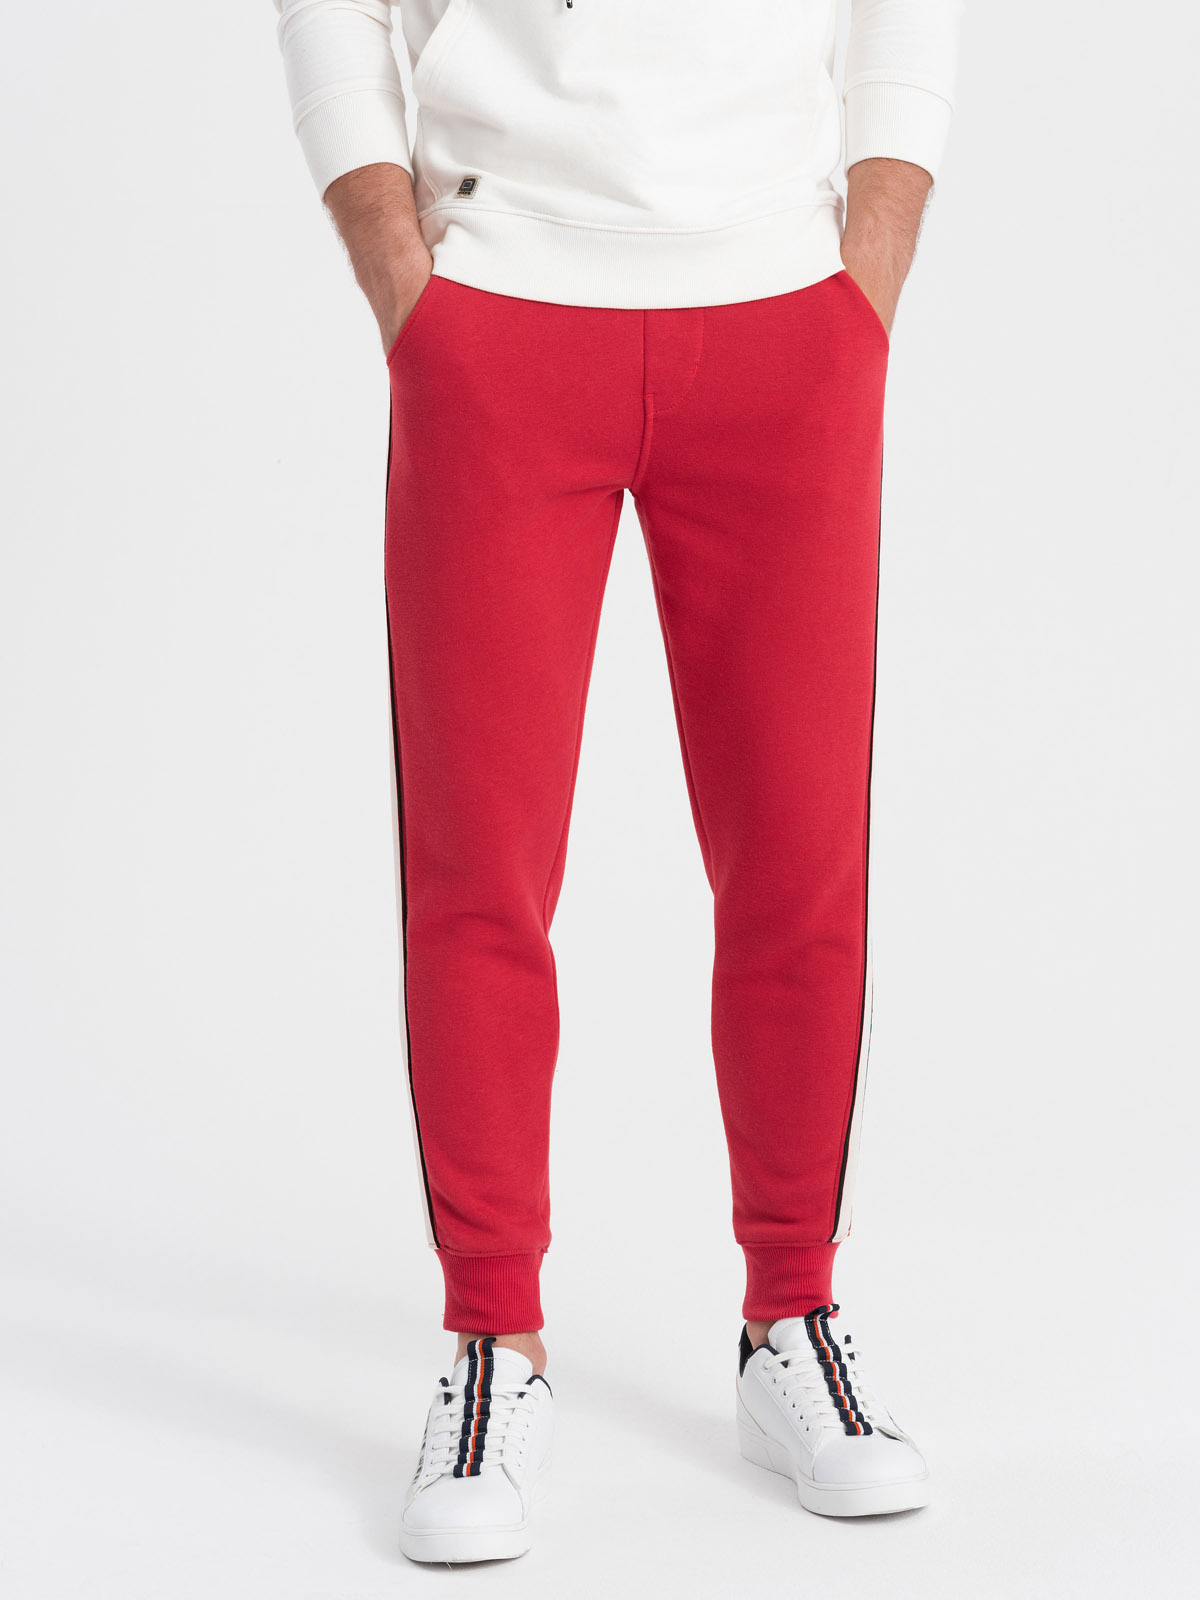 Men's sweatpants P865 - yellow | MODONE wholesale - Clothing For Men